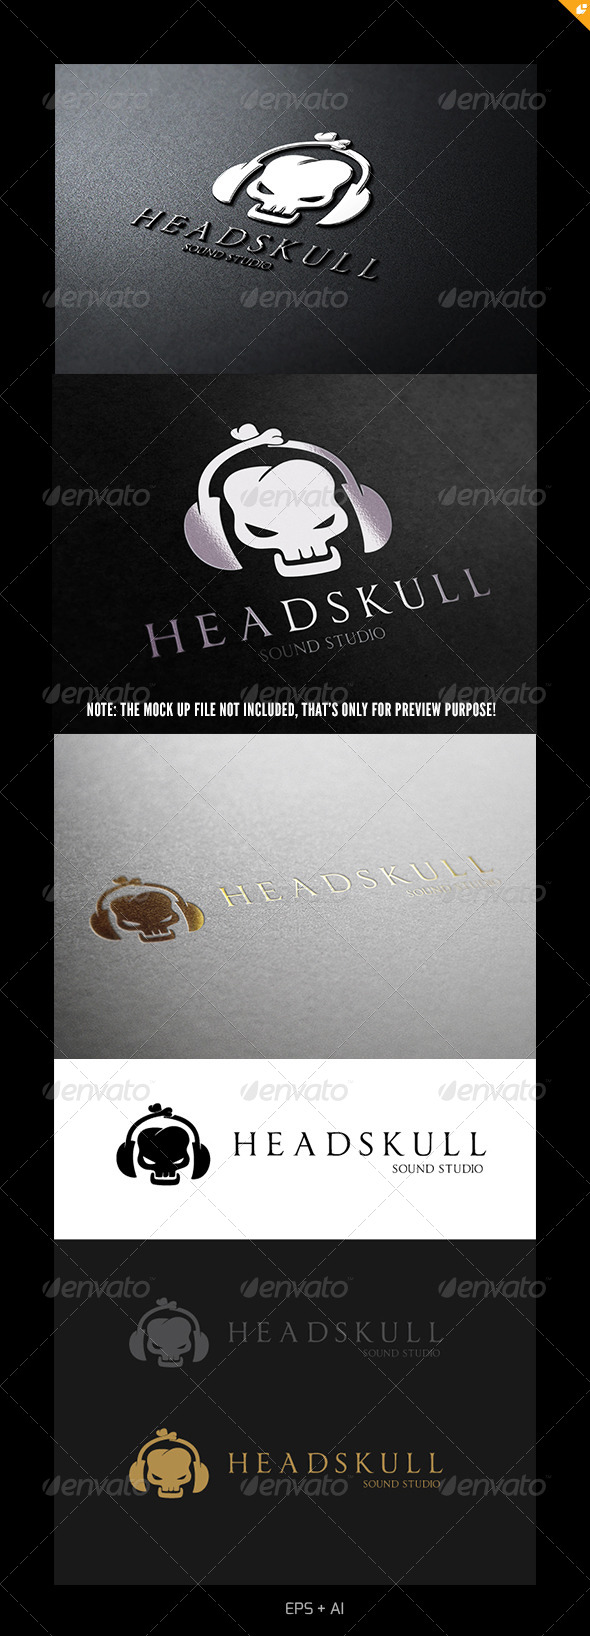 Head Skull Sound Studio